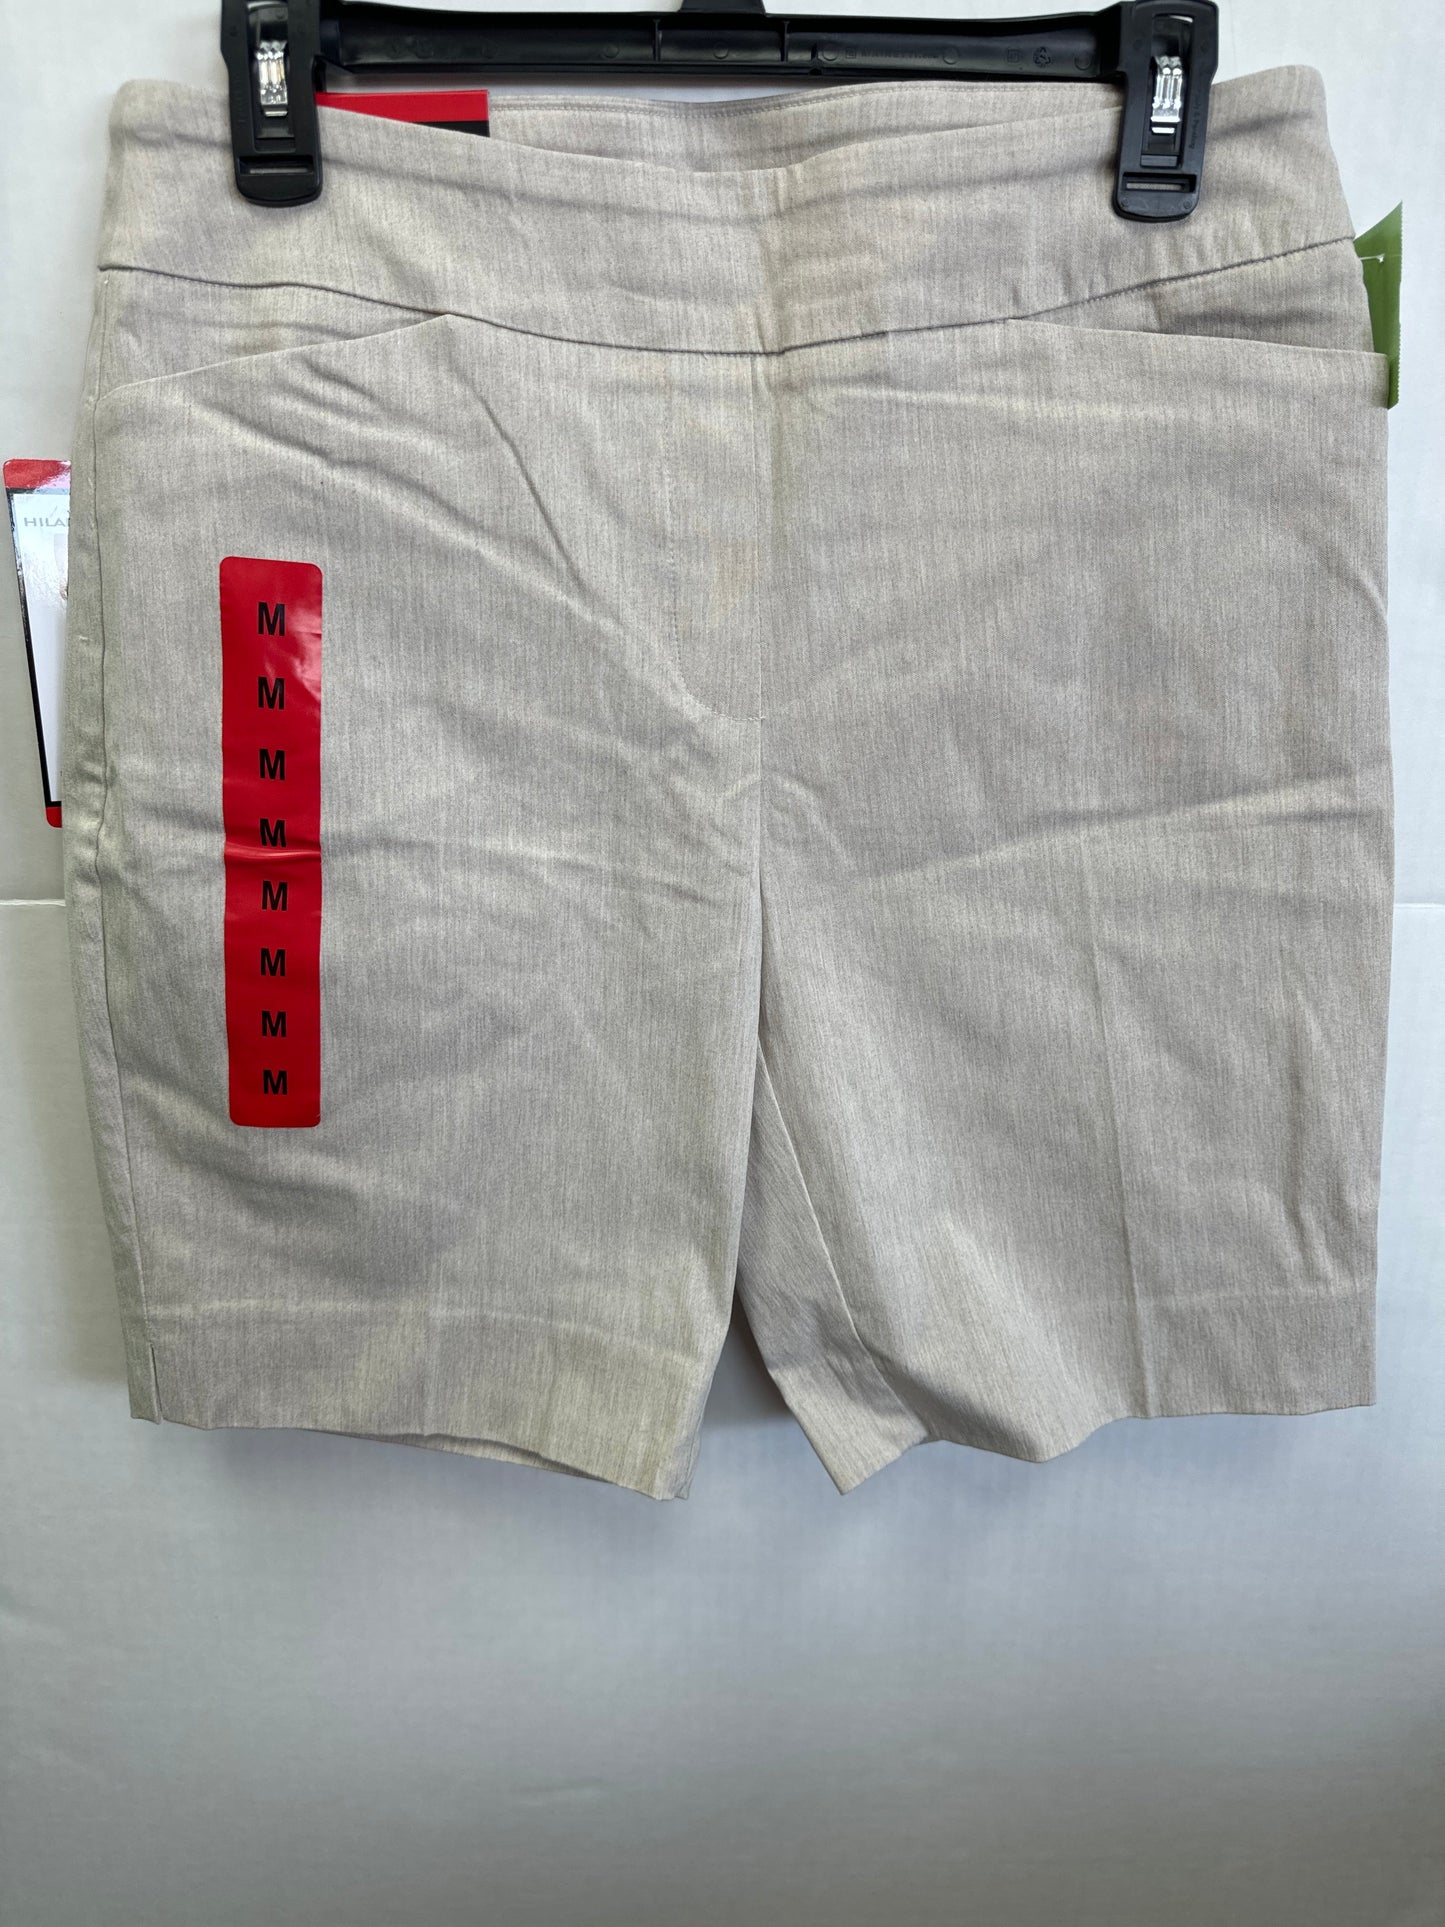 Shorts By Hilary Radley  Size: M